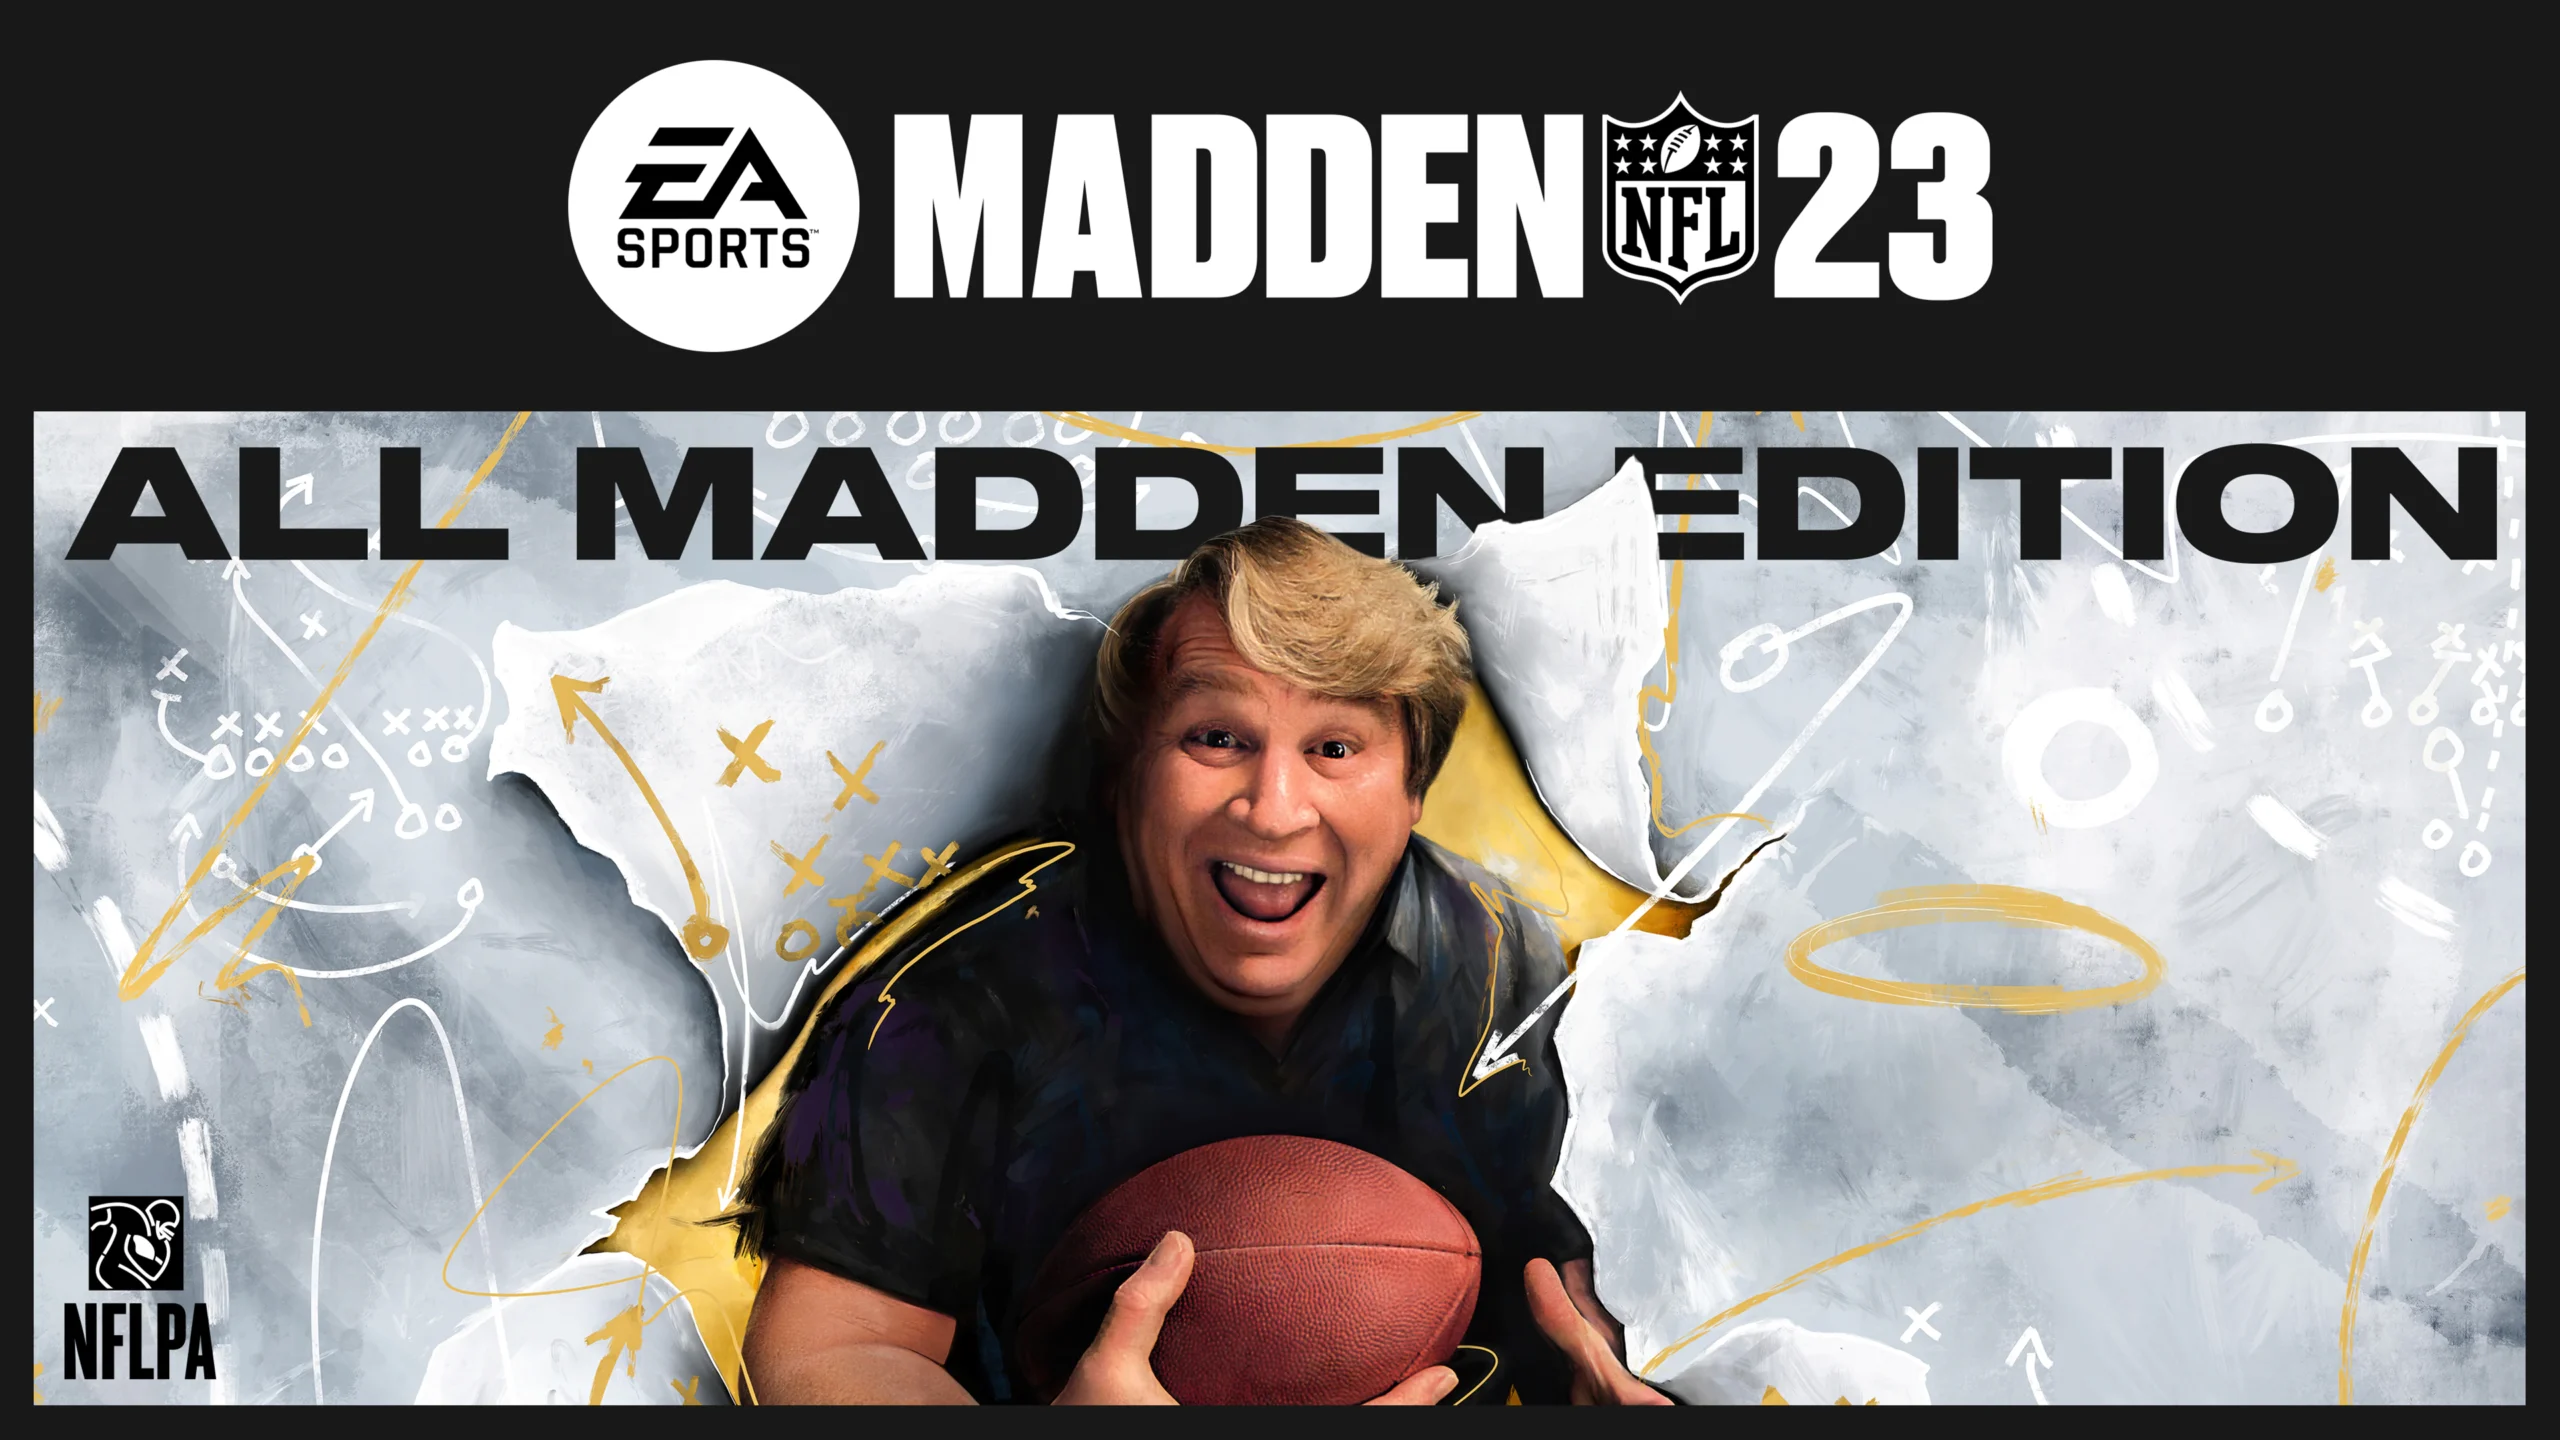 Madden NFL 23 game poster